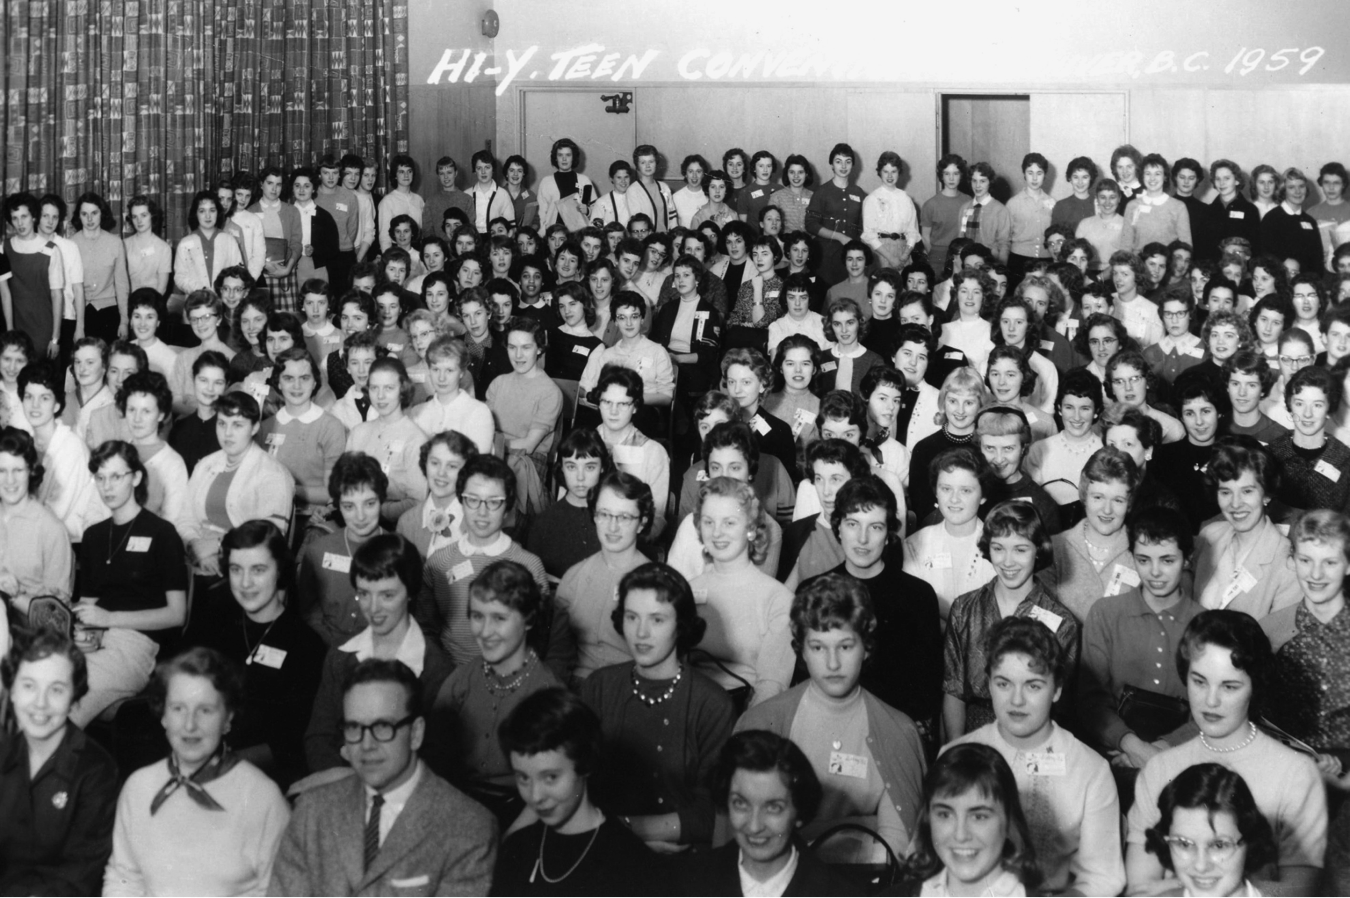 David Thompson School Girls Hi-Y Club sponsors a convention in Vancouver (1959.)